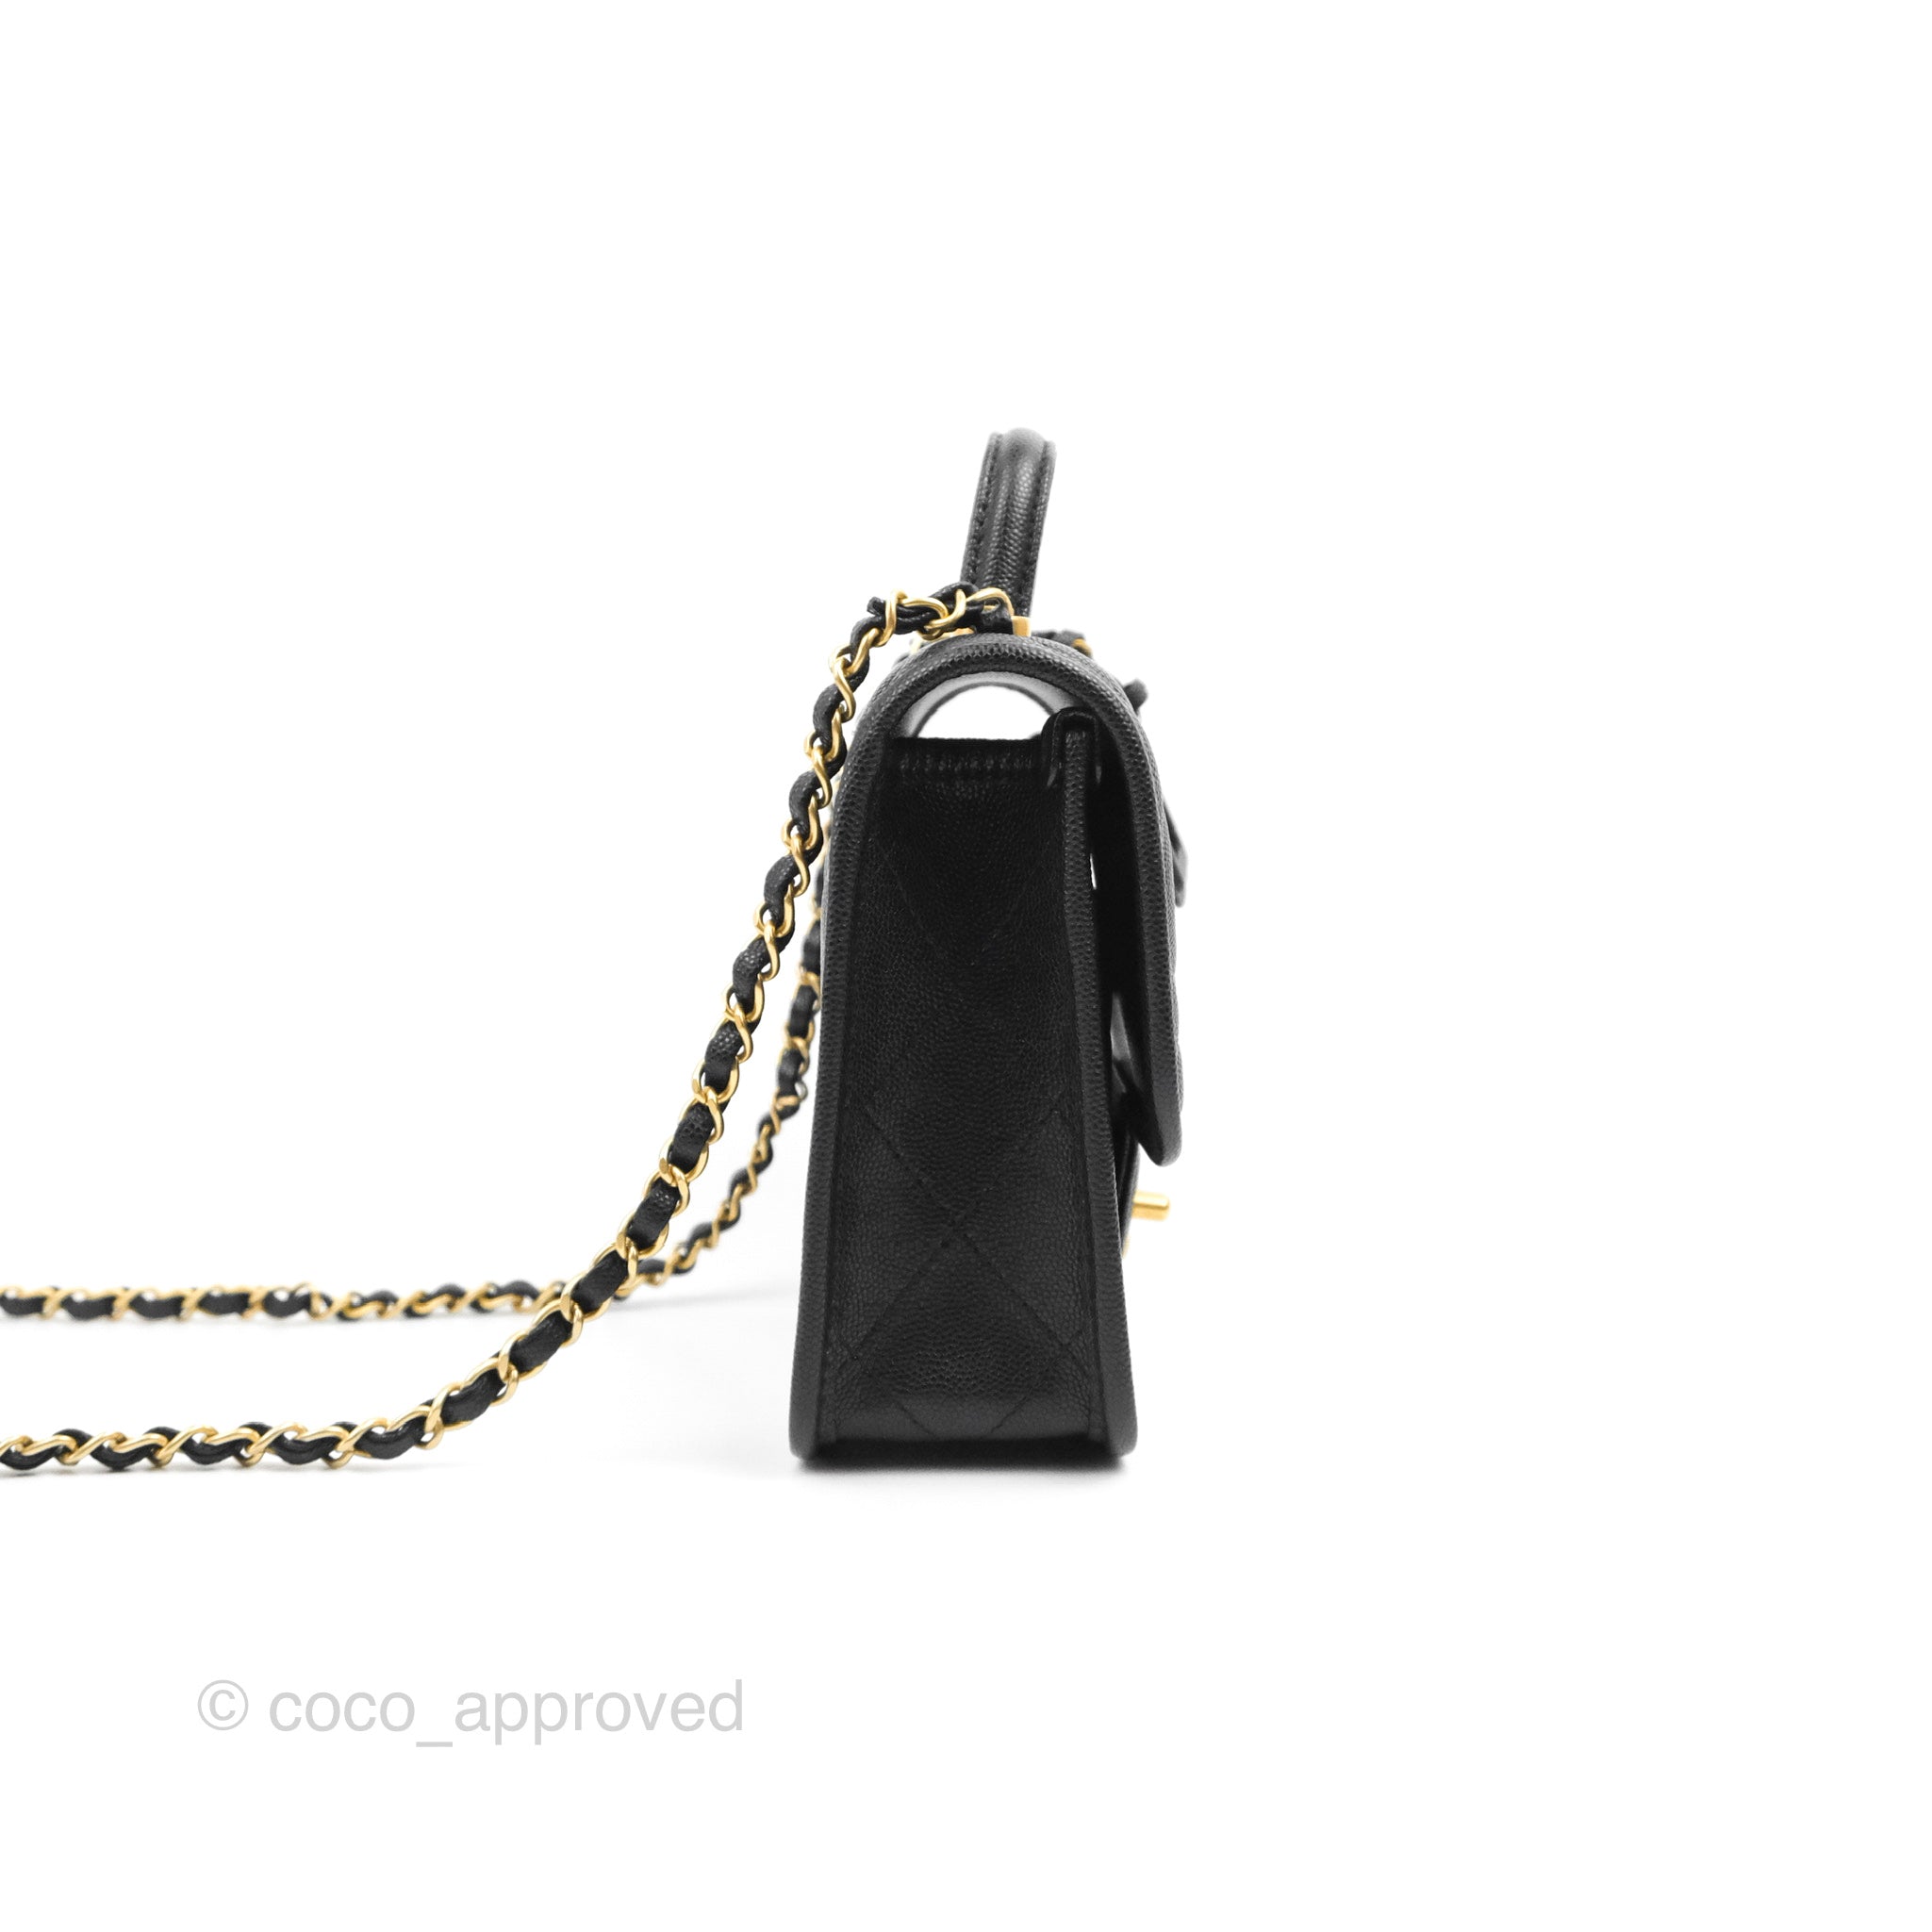 Chanel School Memory Top Handle Flap Bag Black Caviar Antique Gold Hardware